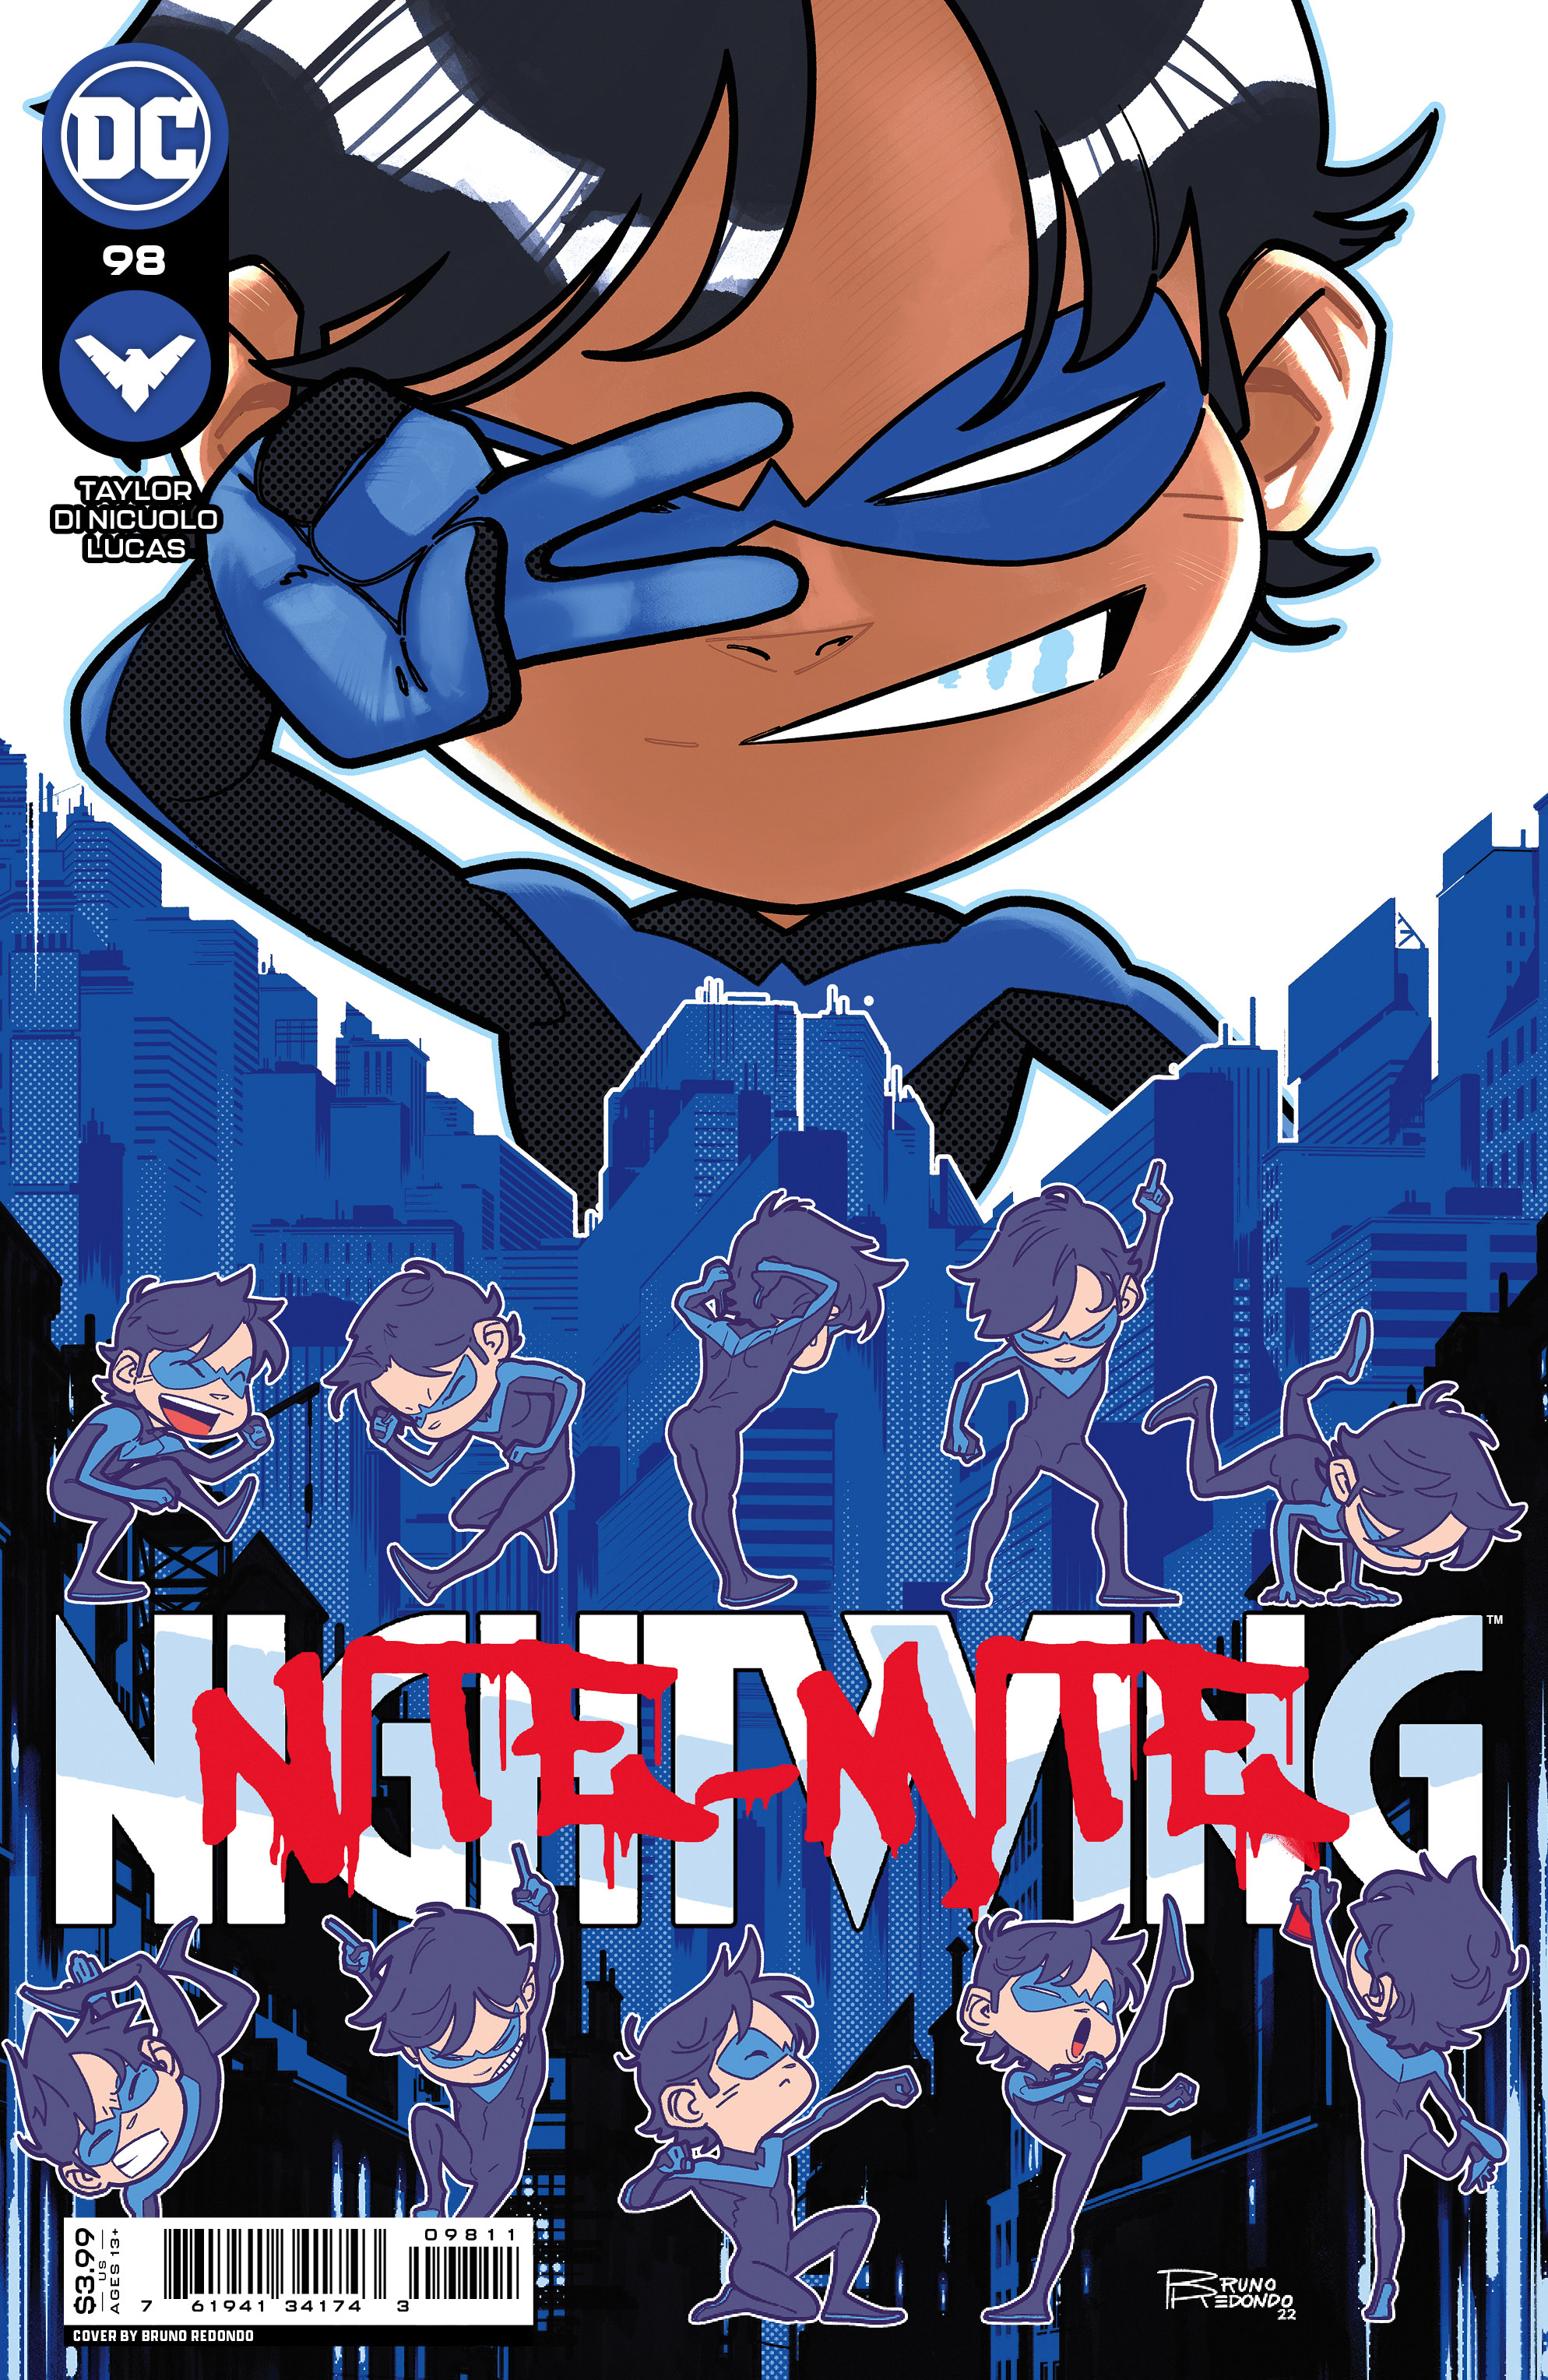 Nightwing #98 Cover A Bruno Redondo (2016)